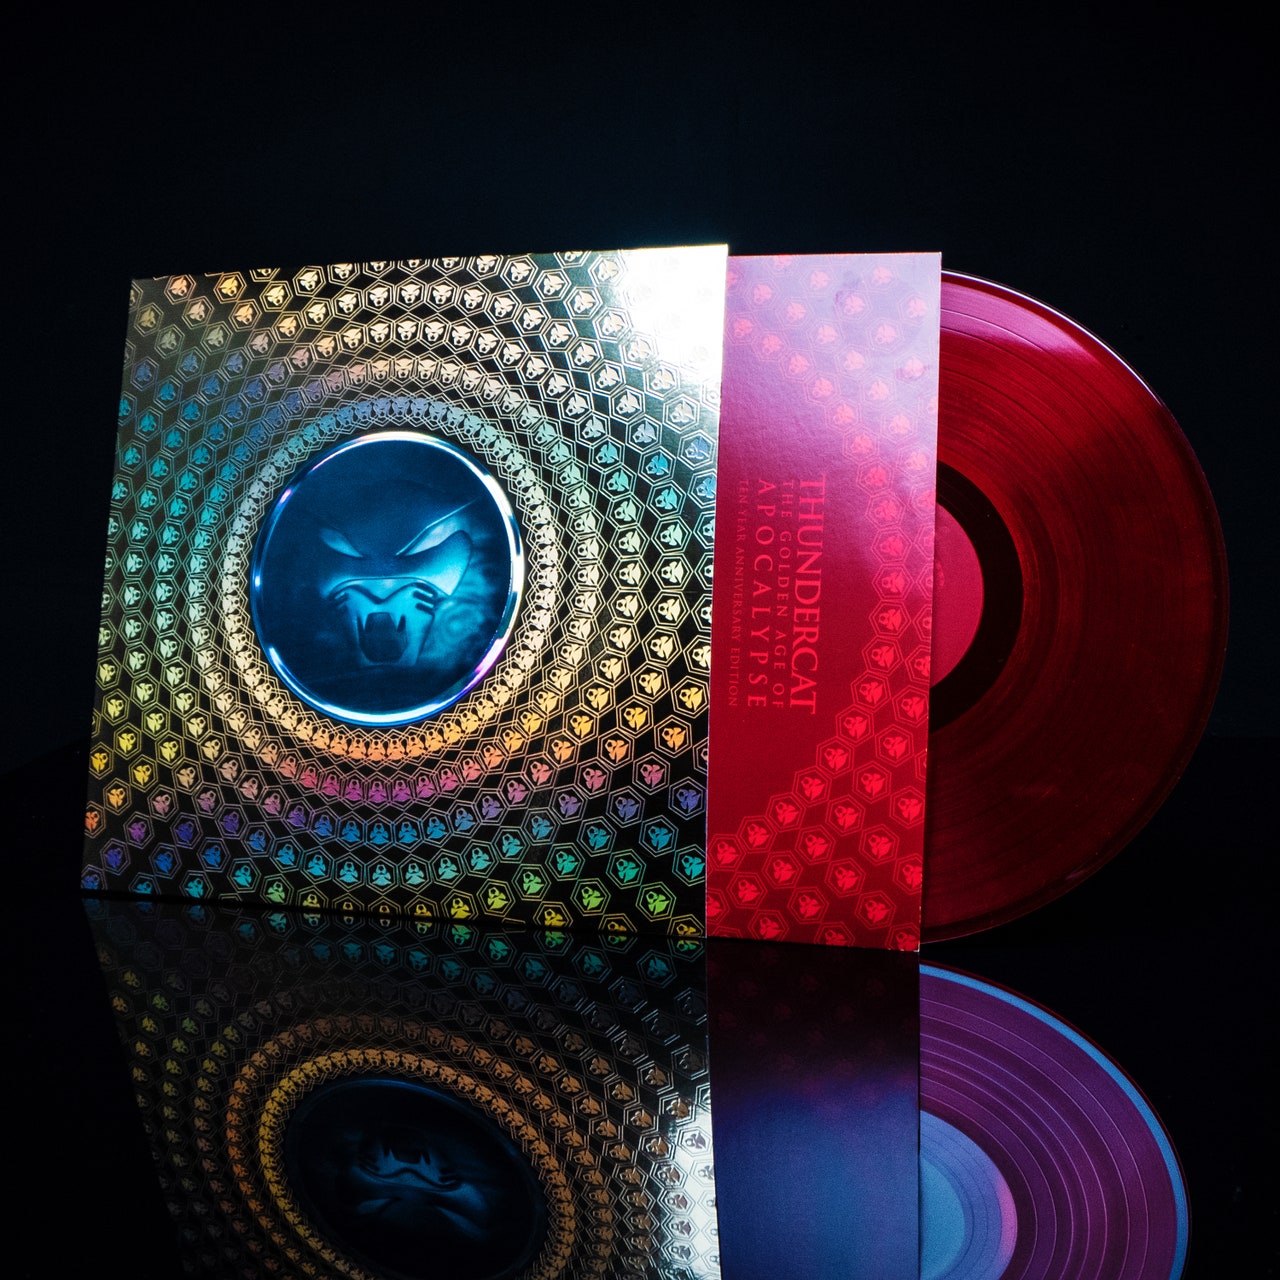 Thundercat - The Golden Age Of Apocalypse (10 Year Anniversary Red Translucent Vinyl)